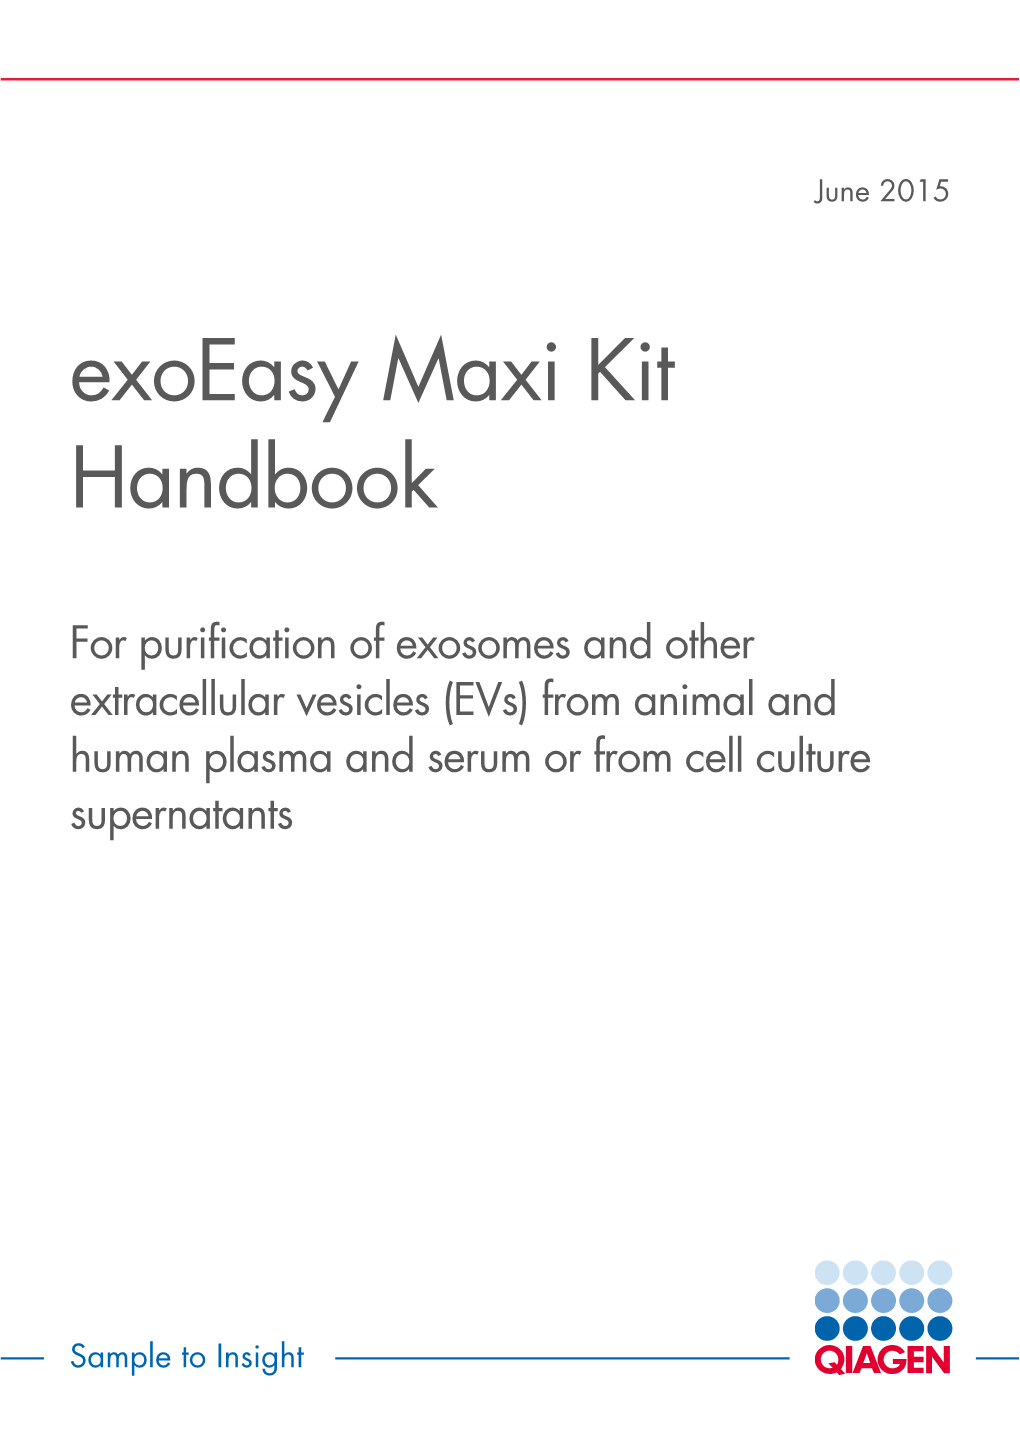 Exoeasy Maxi Kit Handbook